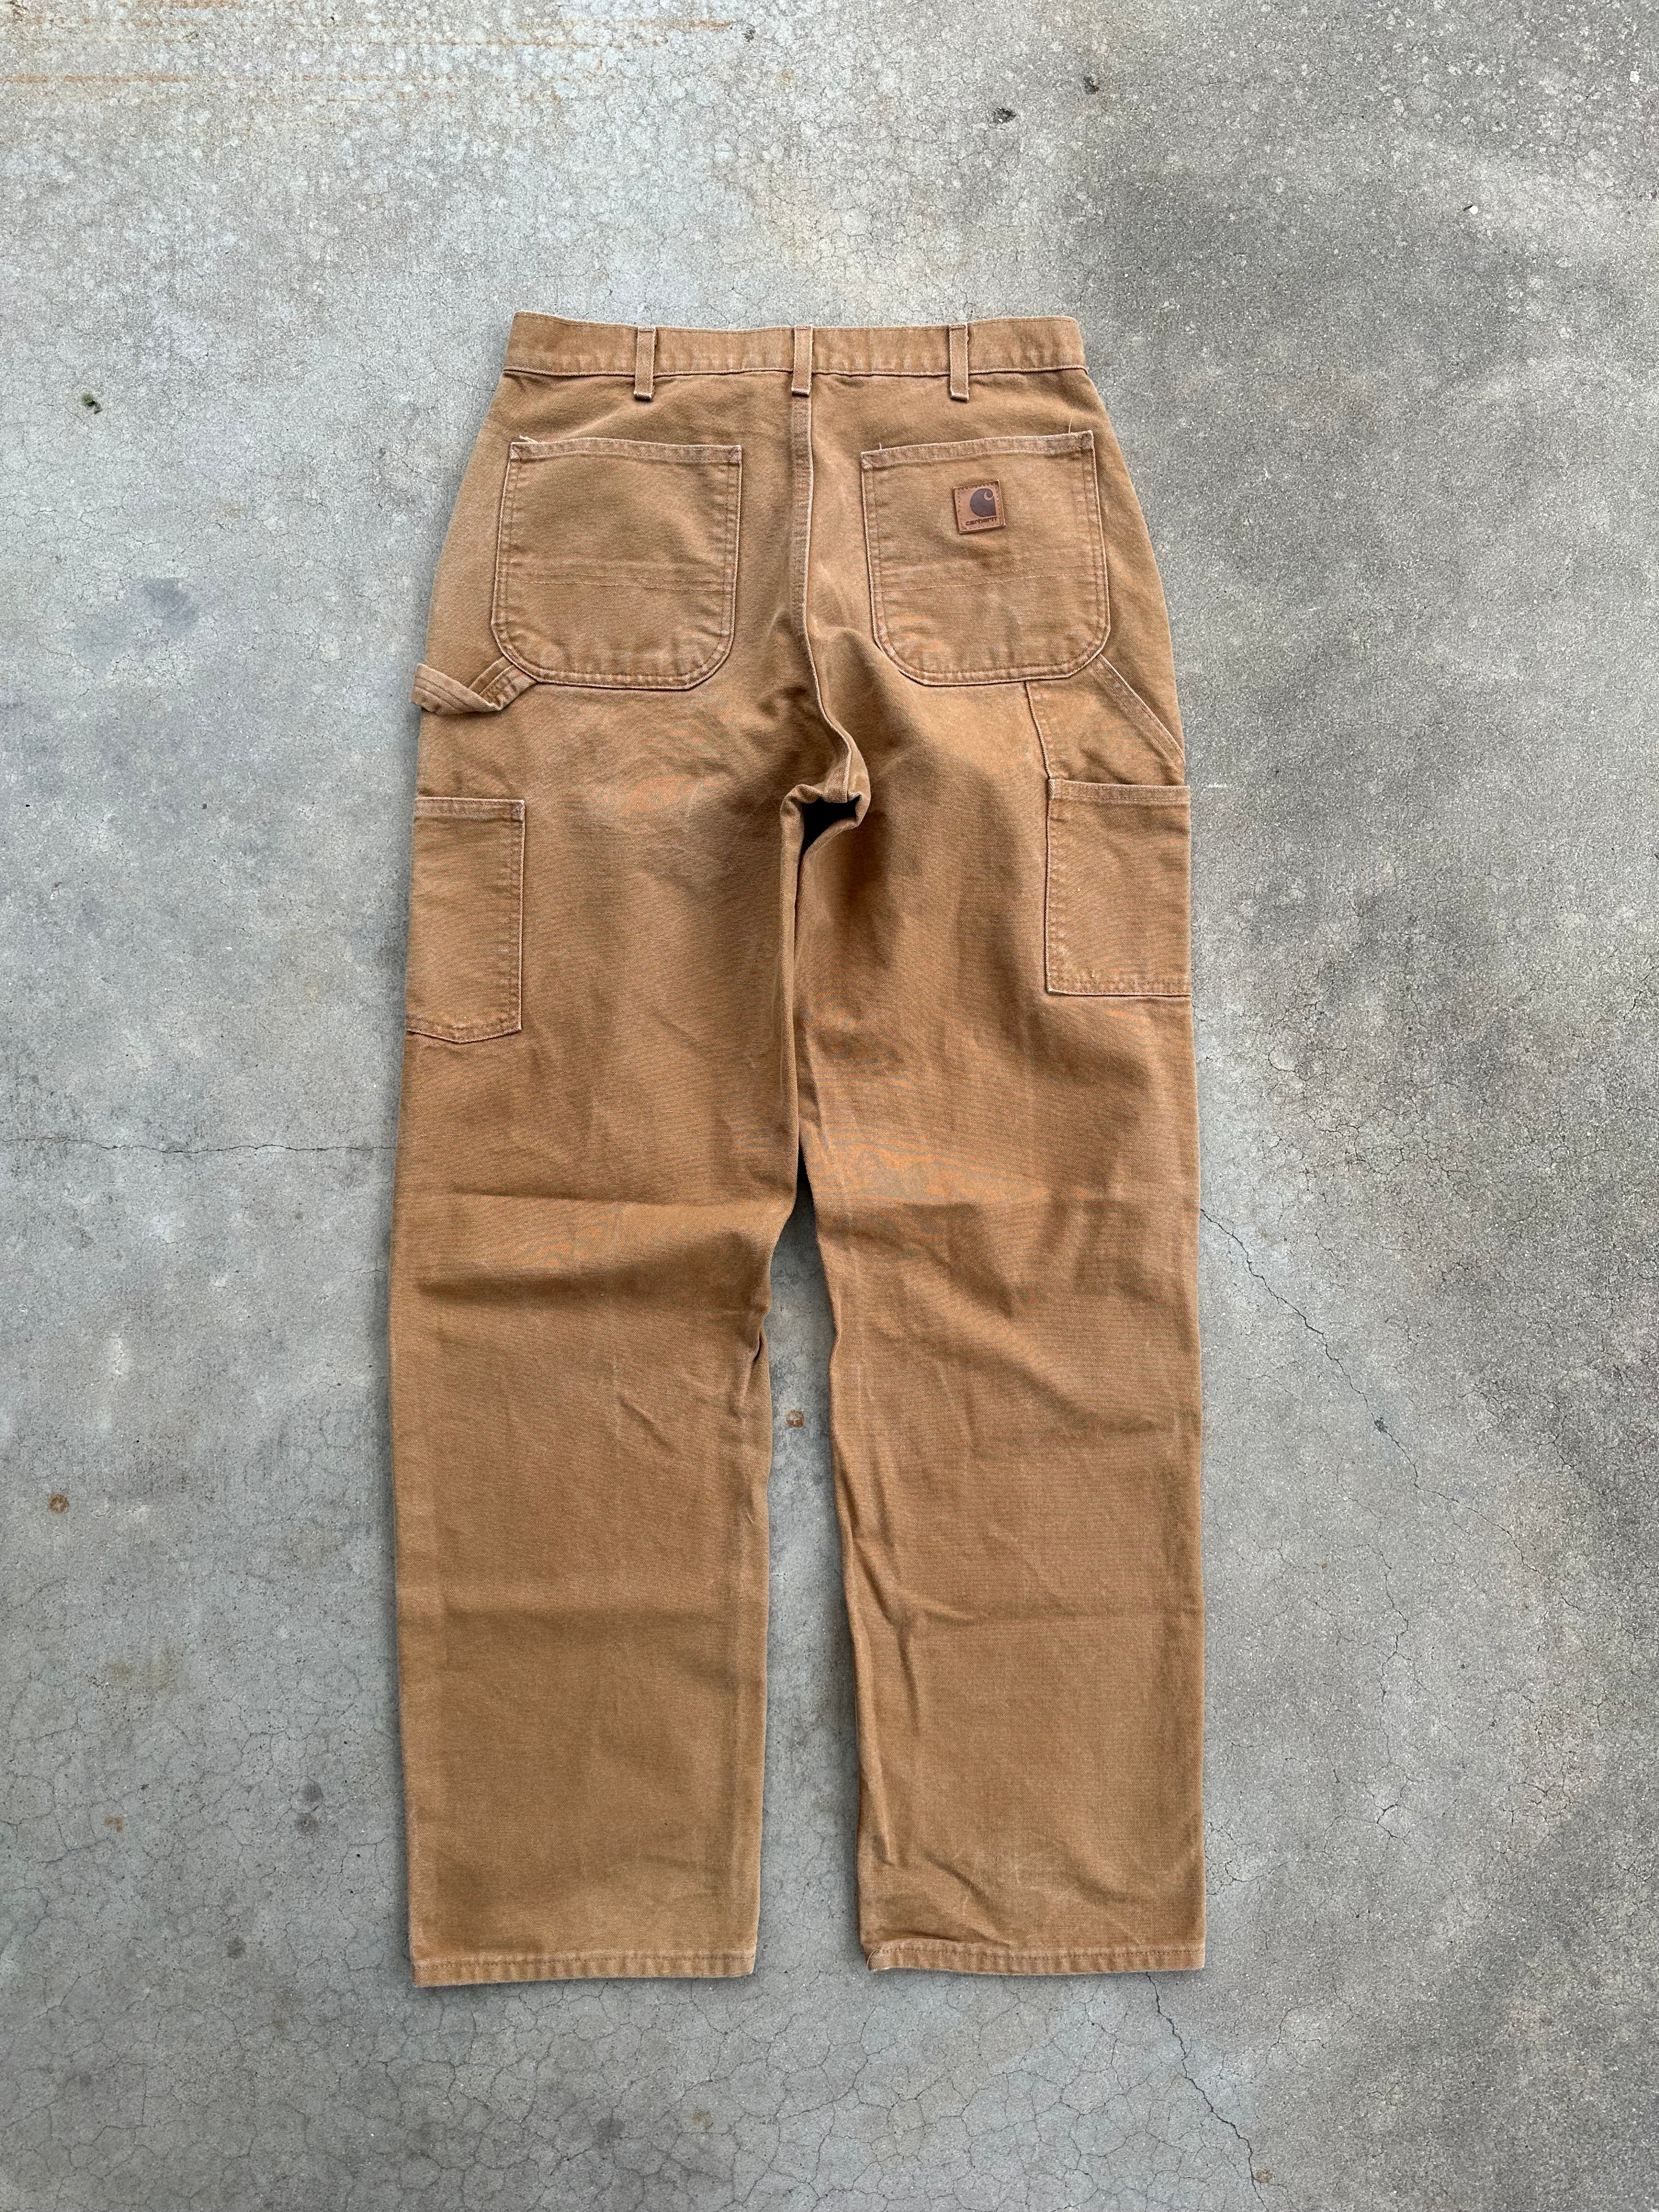 Vintage Carhartt Carpenter Pants (32"x33")